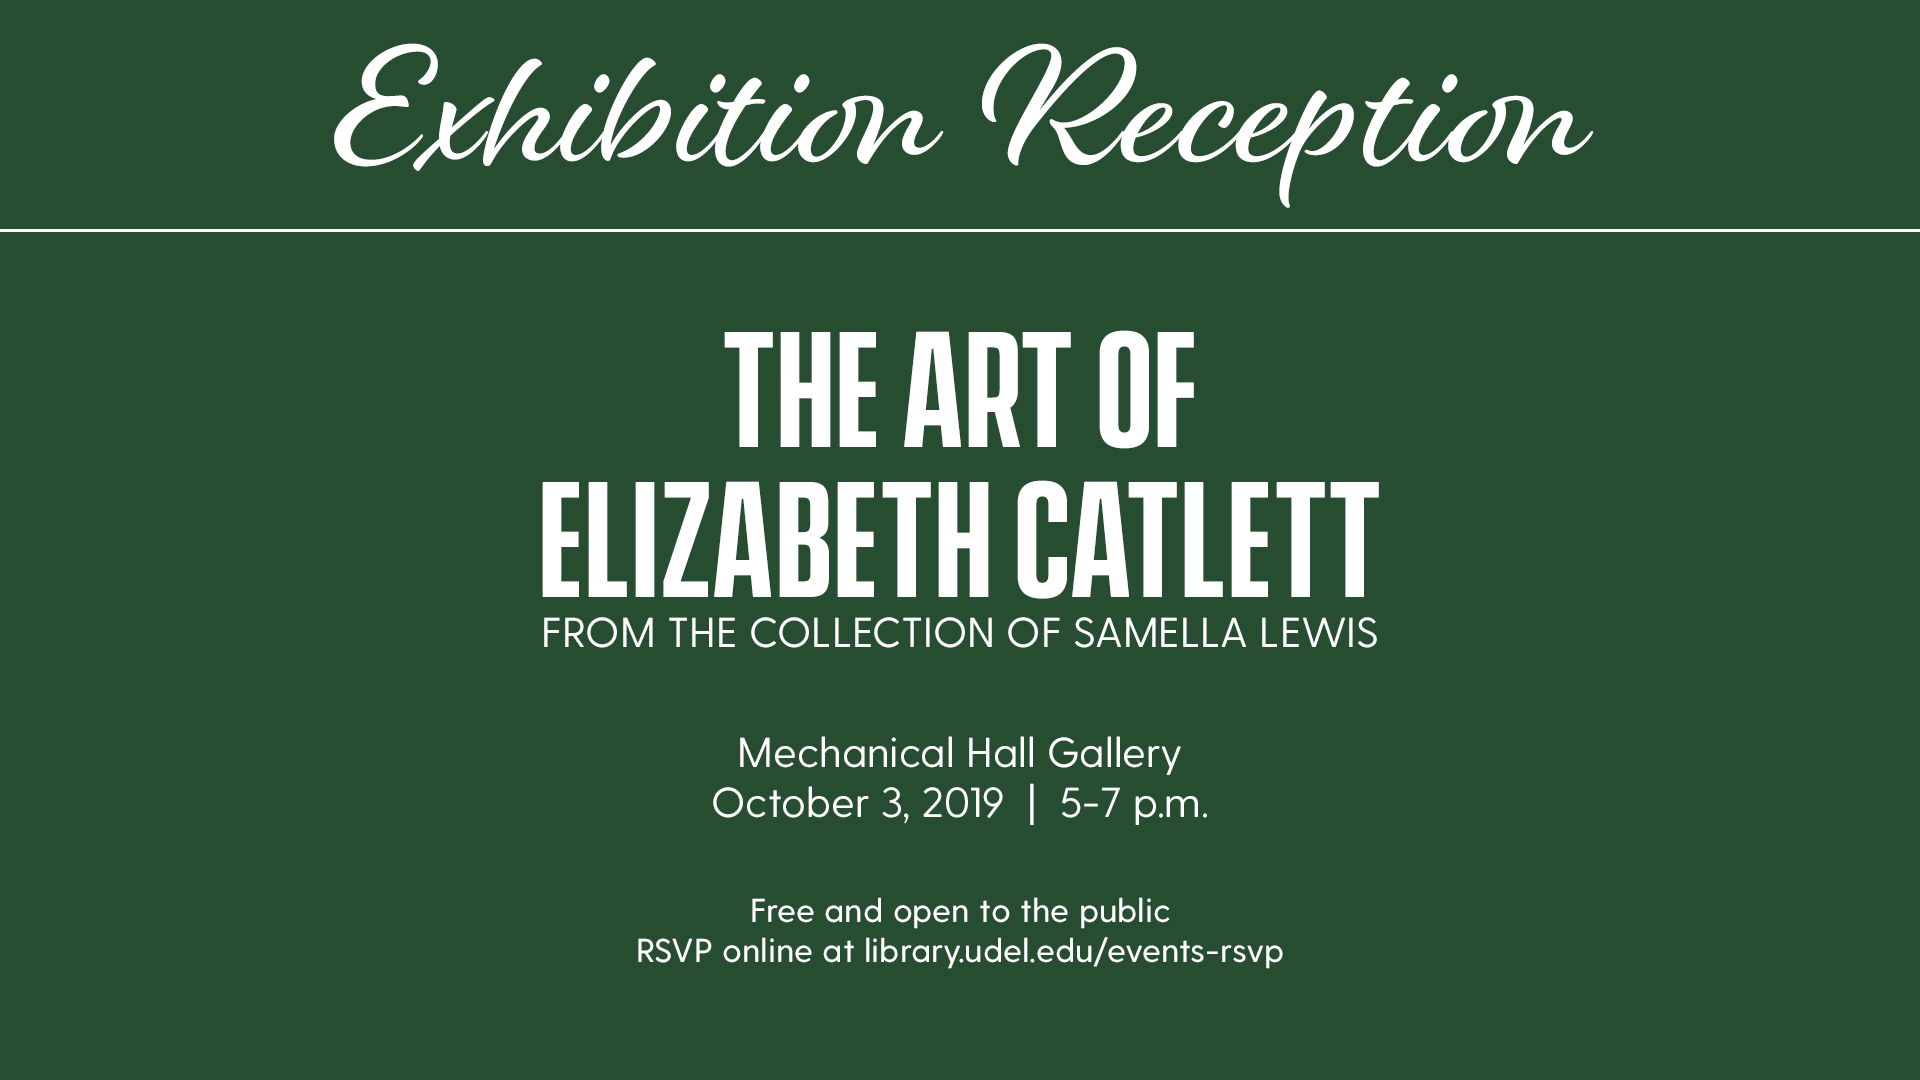 Promotional image for Elizabeth Catlett exhibition reception